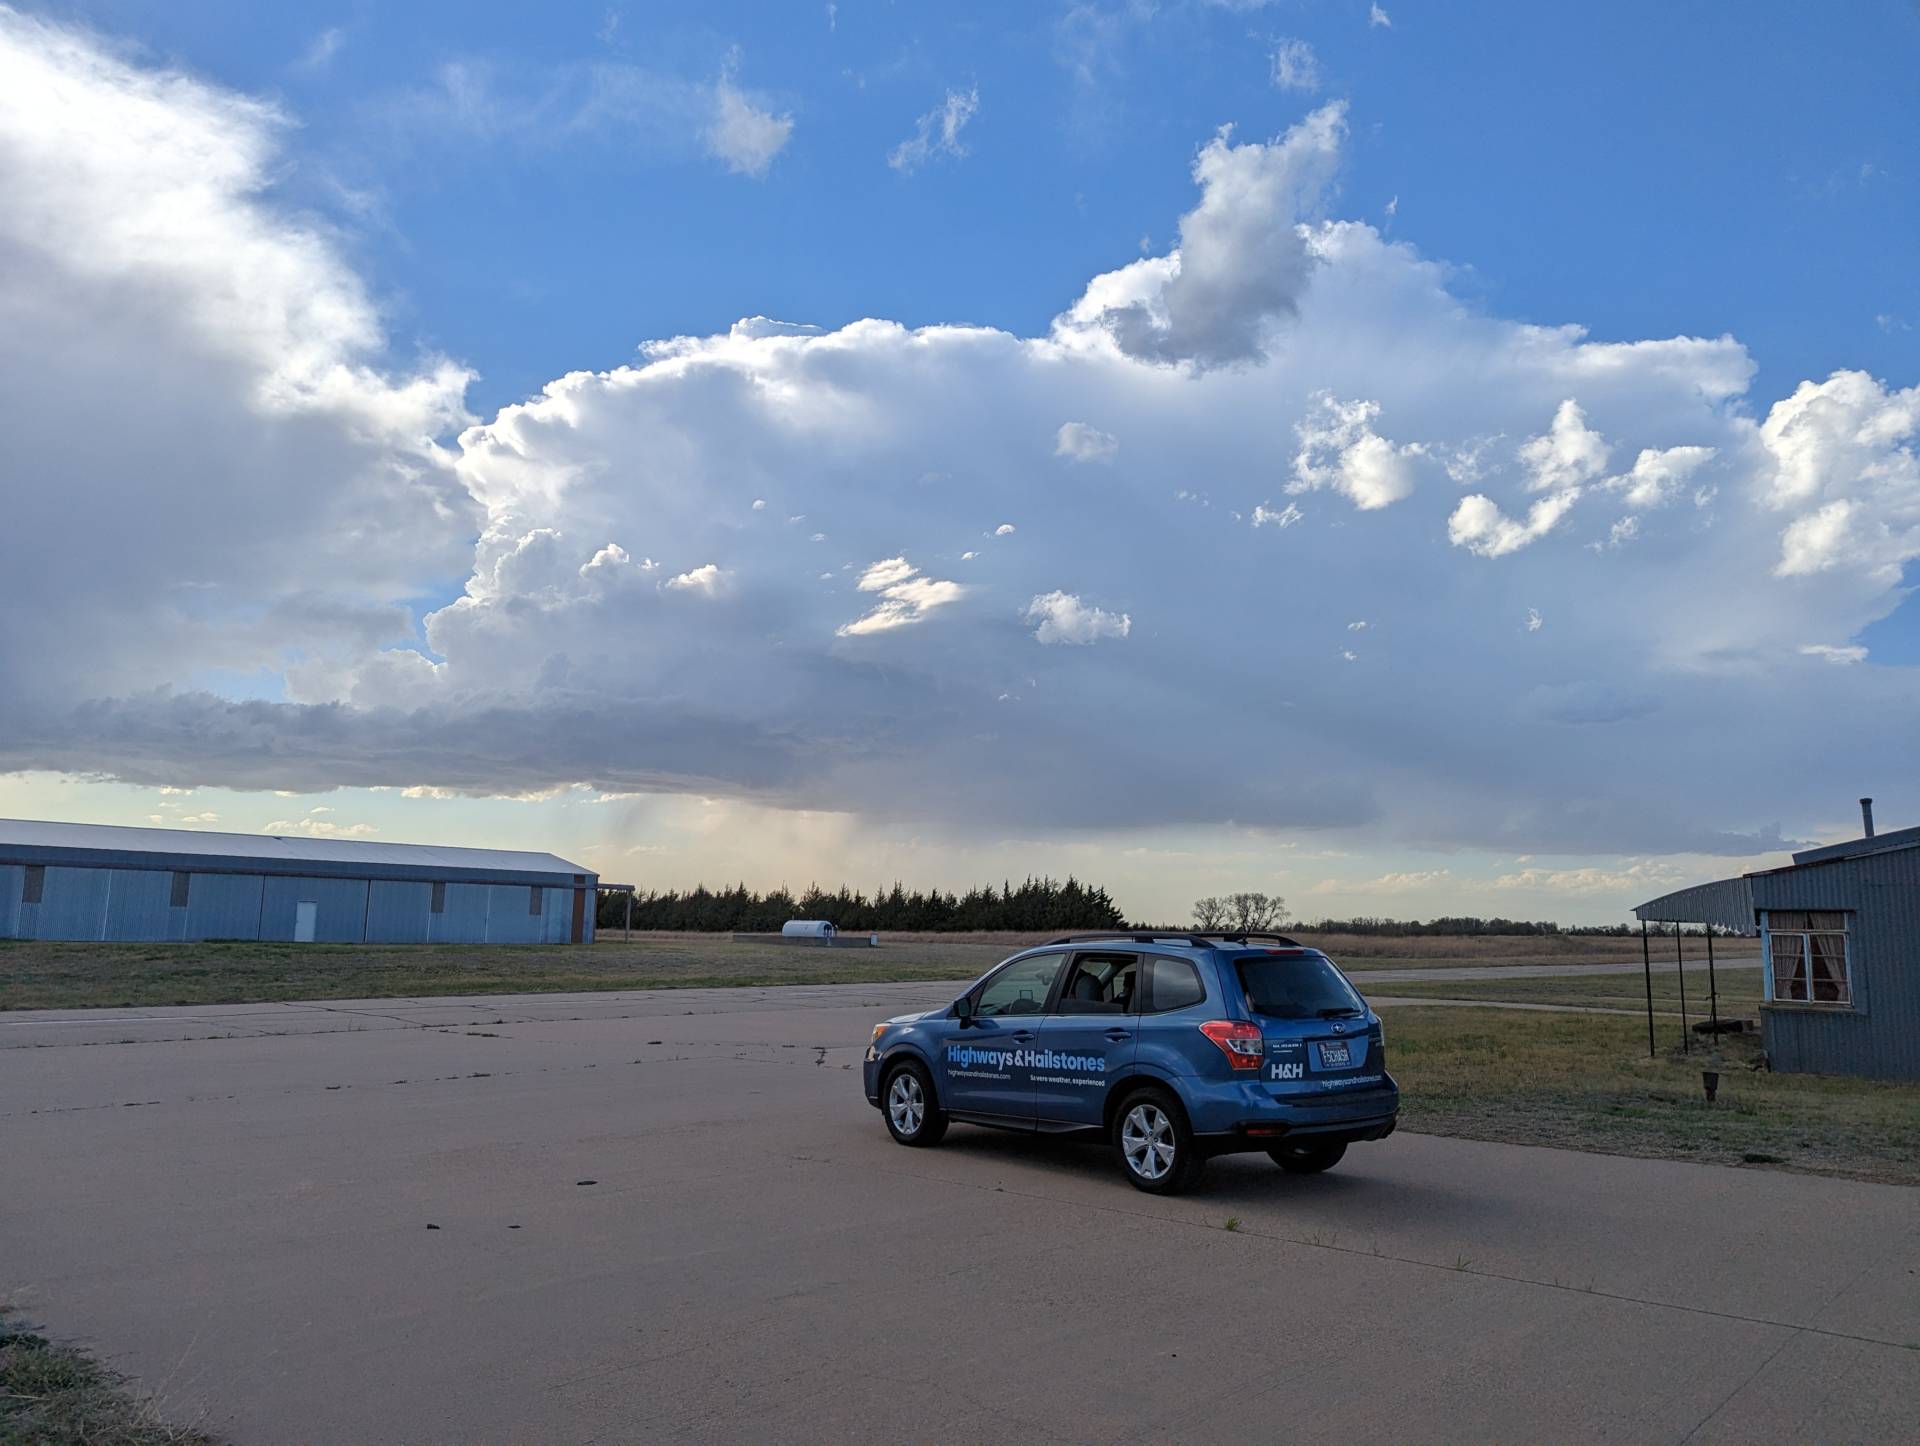 Storm developing quickly near Hudson, Kansas. #kswx @NWSDodgeCity